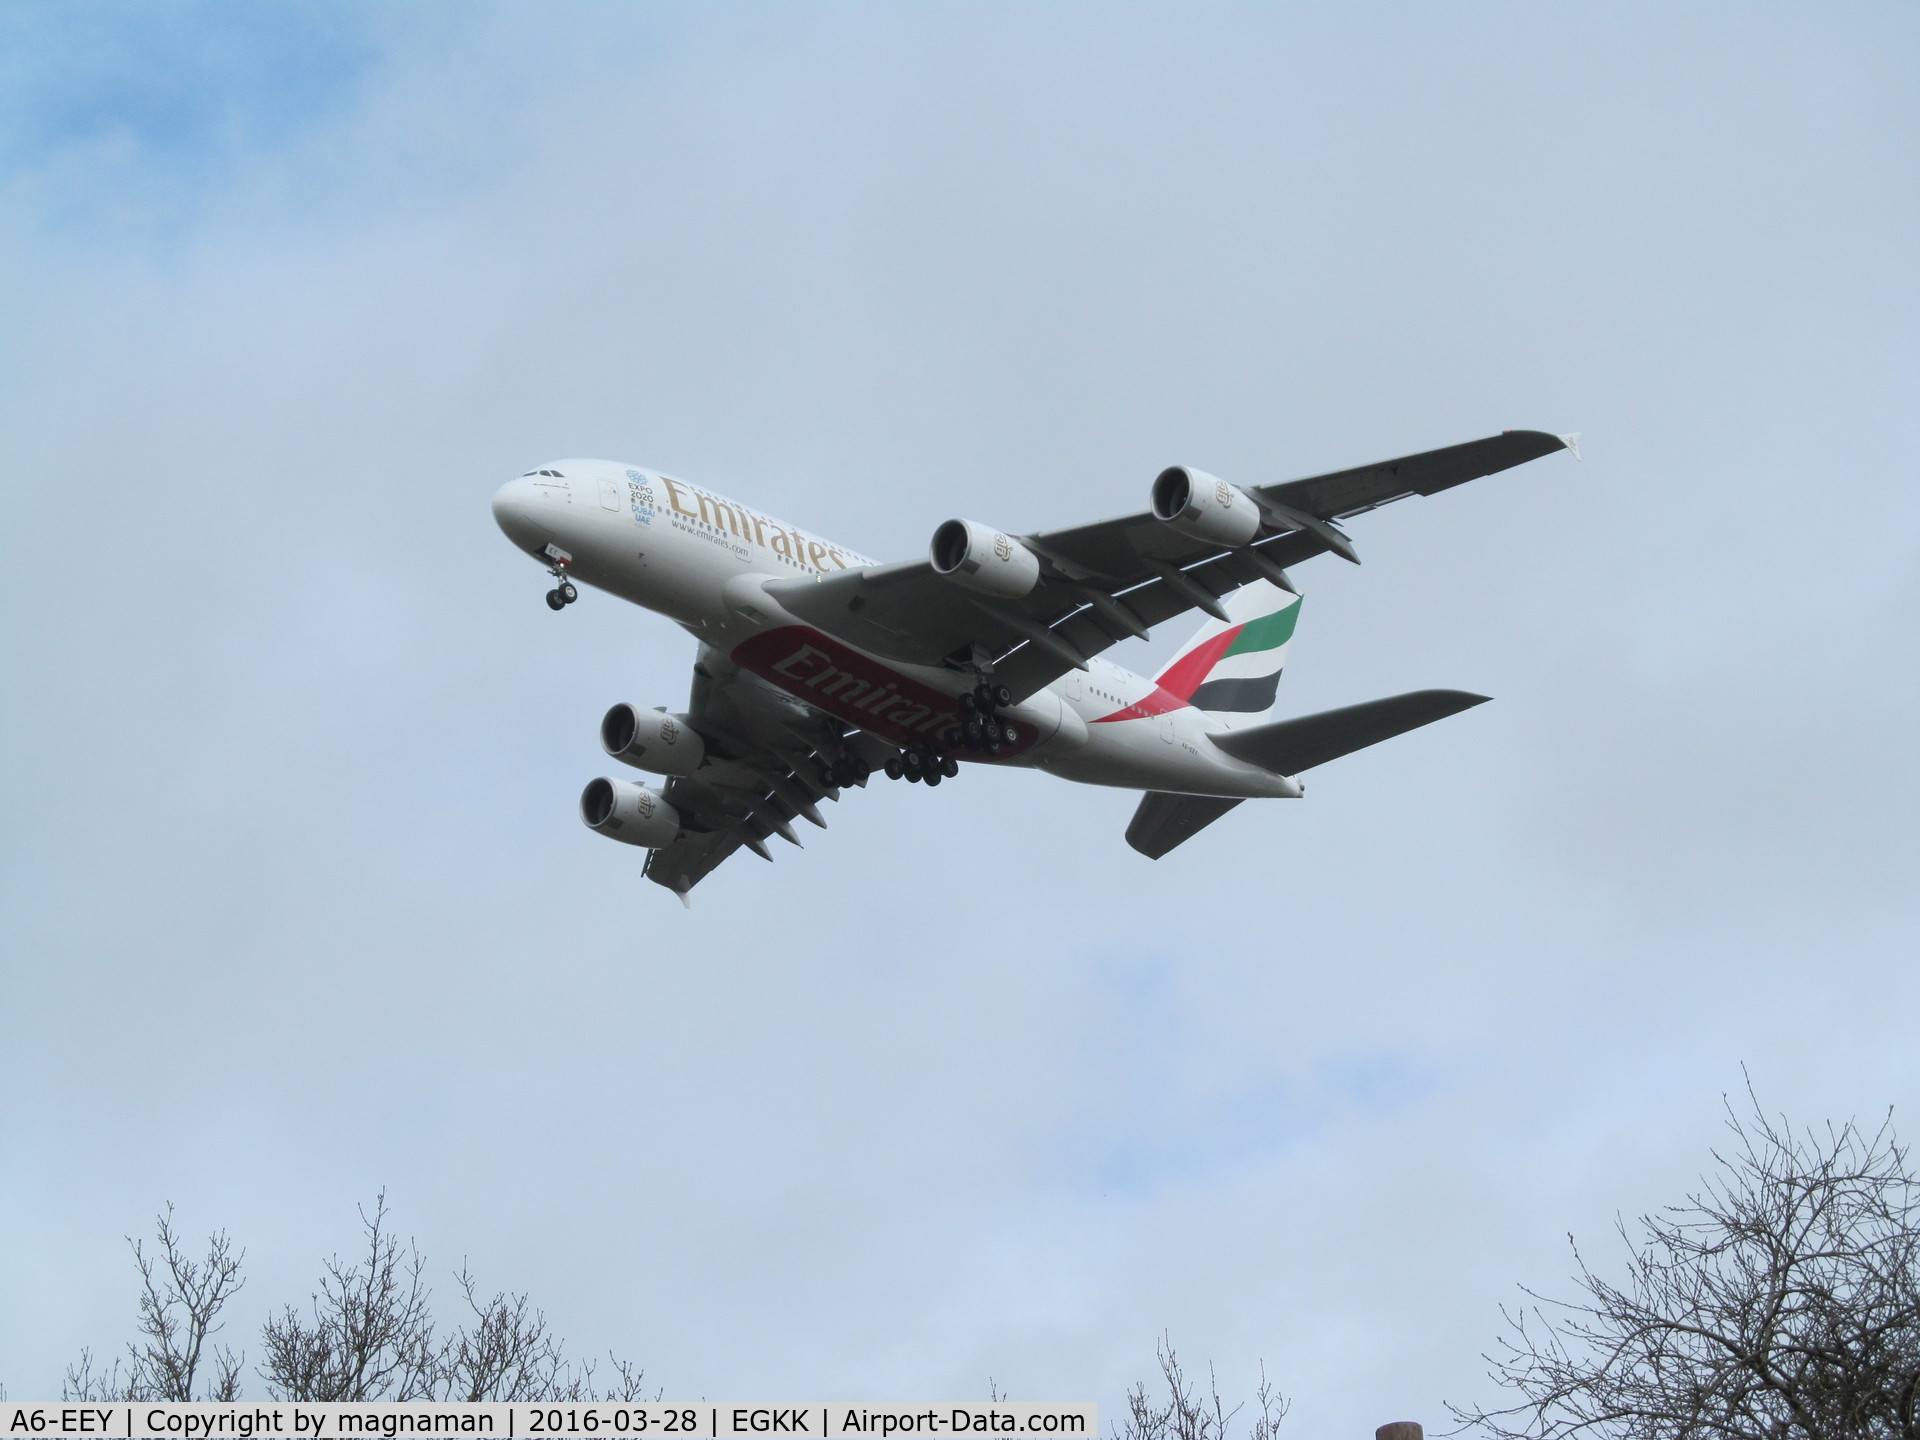 A6-EEY, 2014 Airbus A380-861 C/N 157, landing at LGW